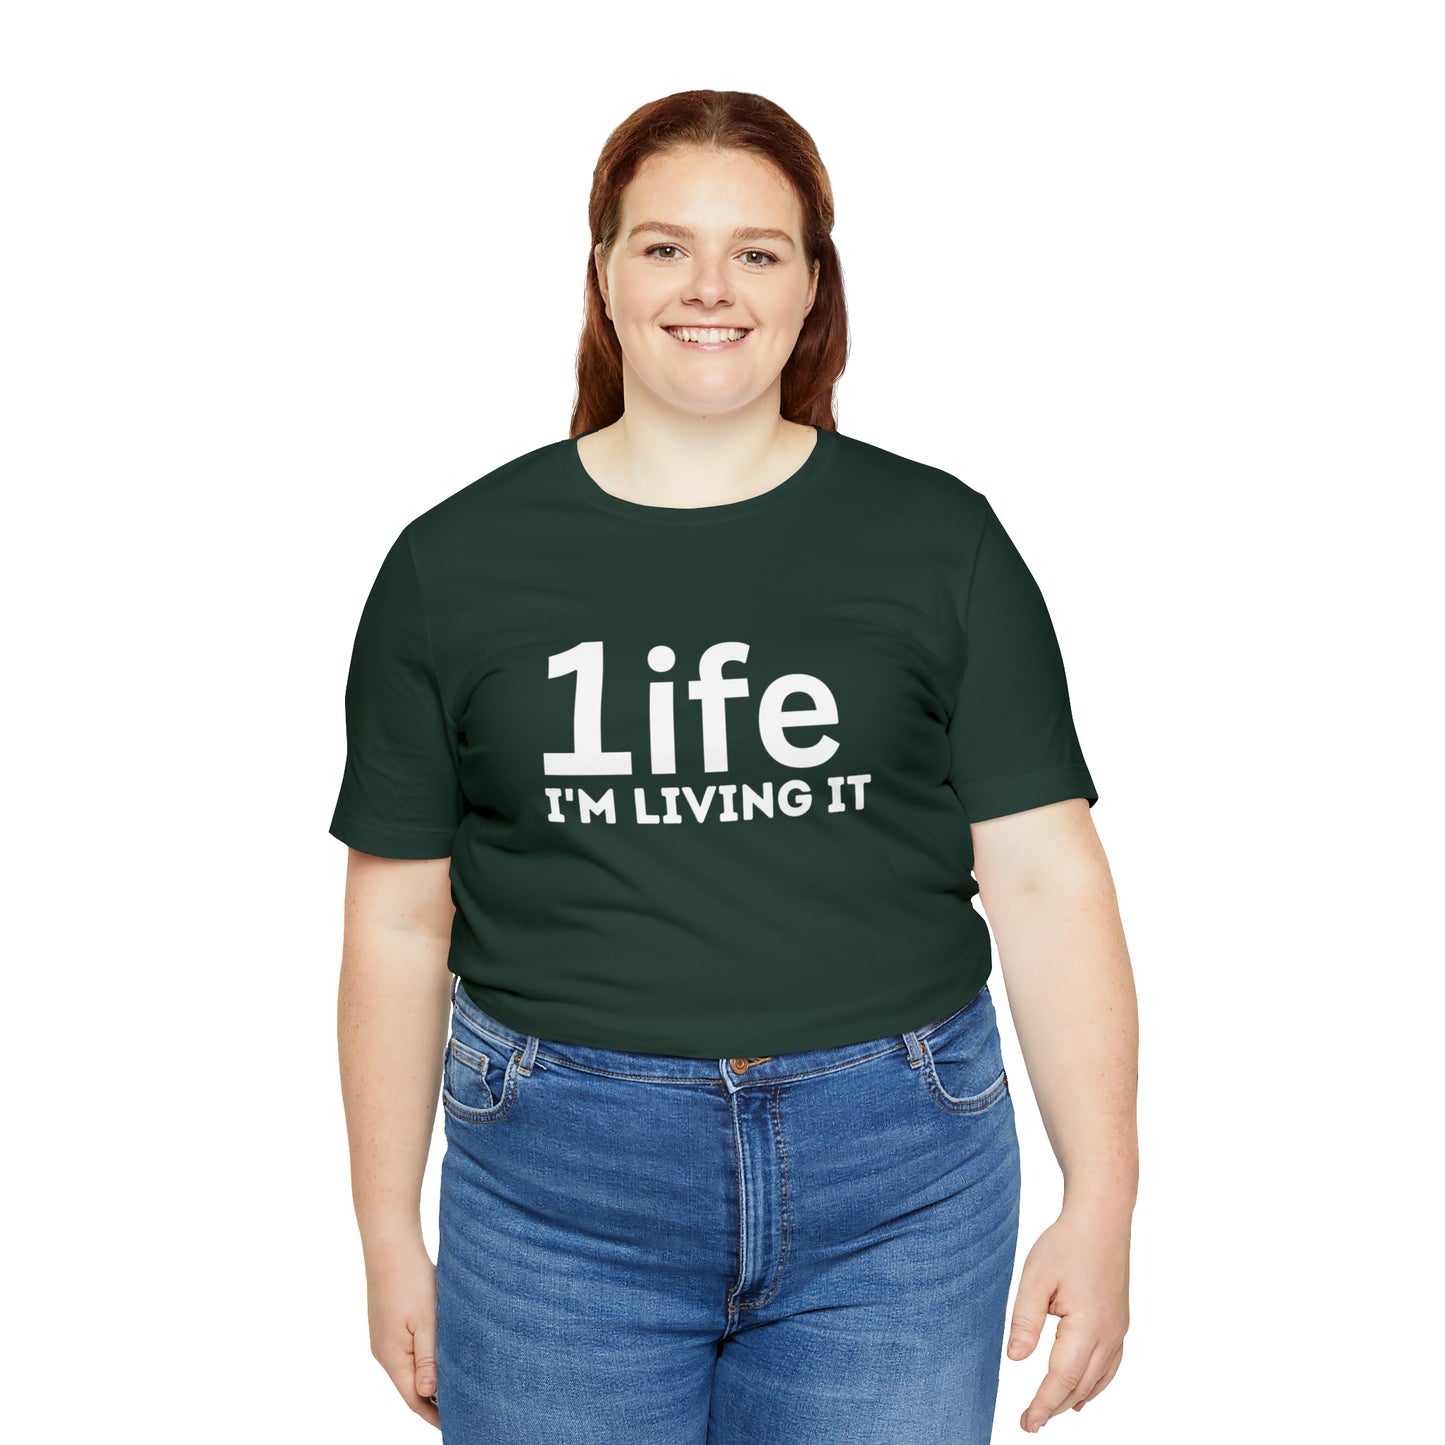 One Life I'M Living It Shirt One life Shirt 1life shirt Live Your Life You Only Have One Life To Live Shirt